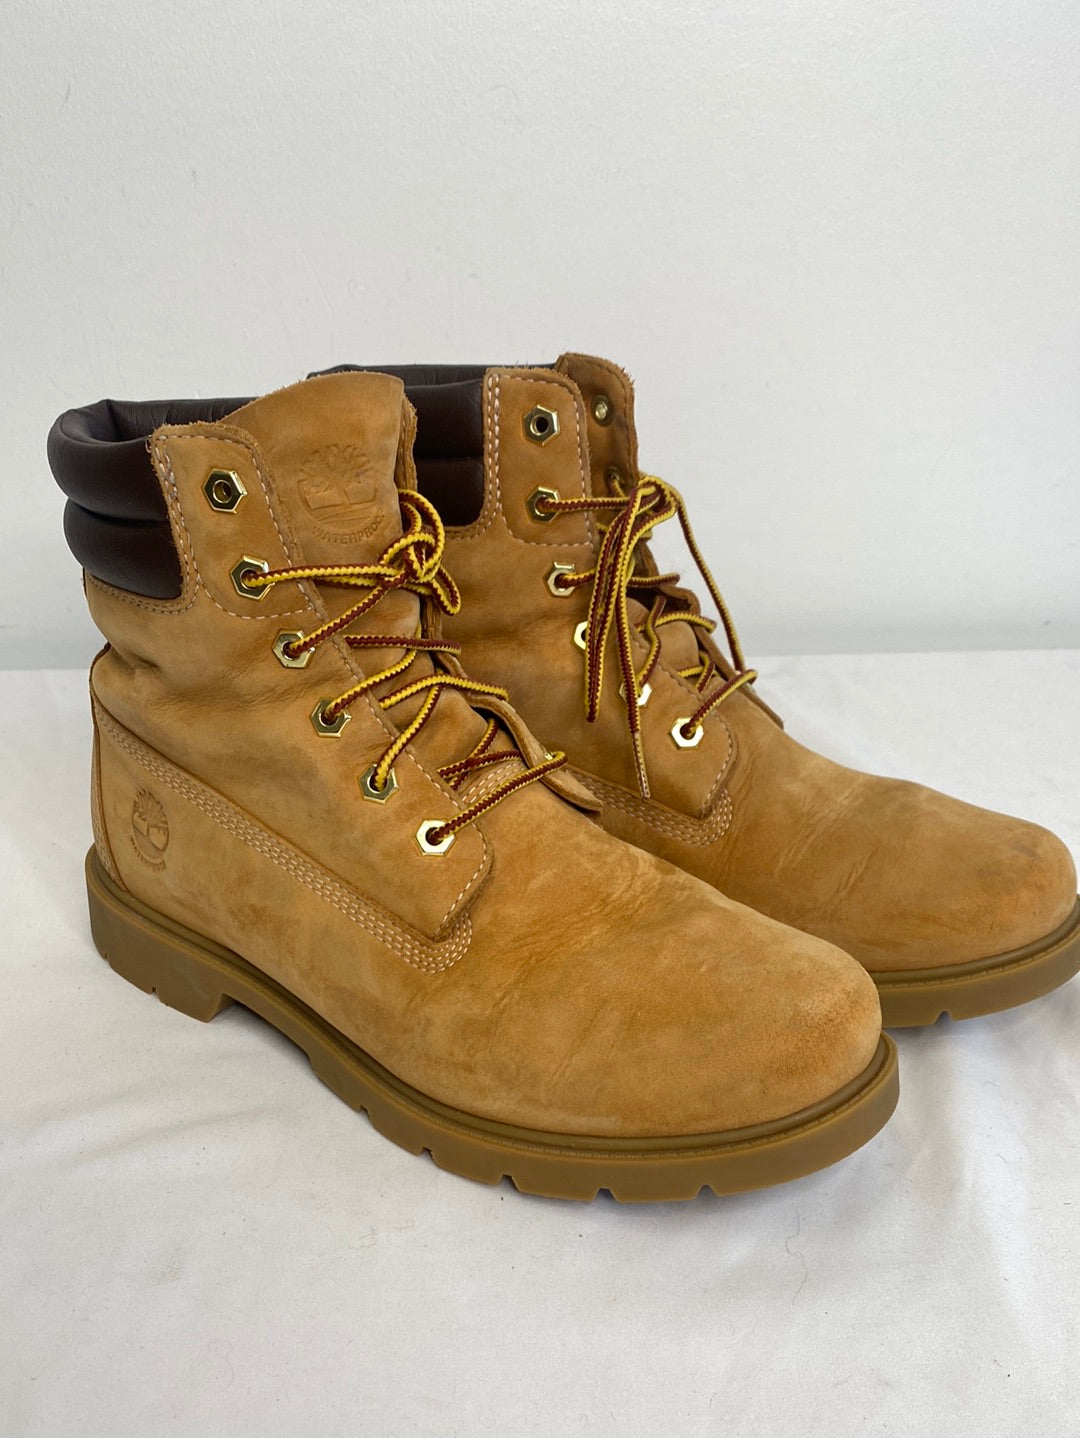 Timberland Linden Woods Boots (10)